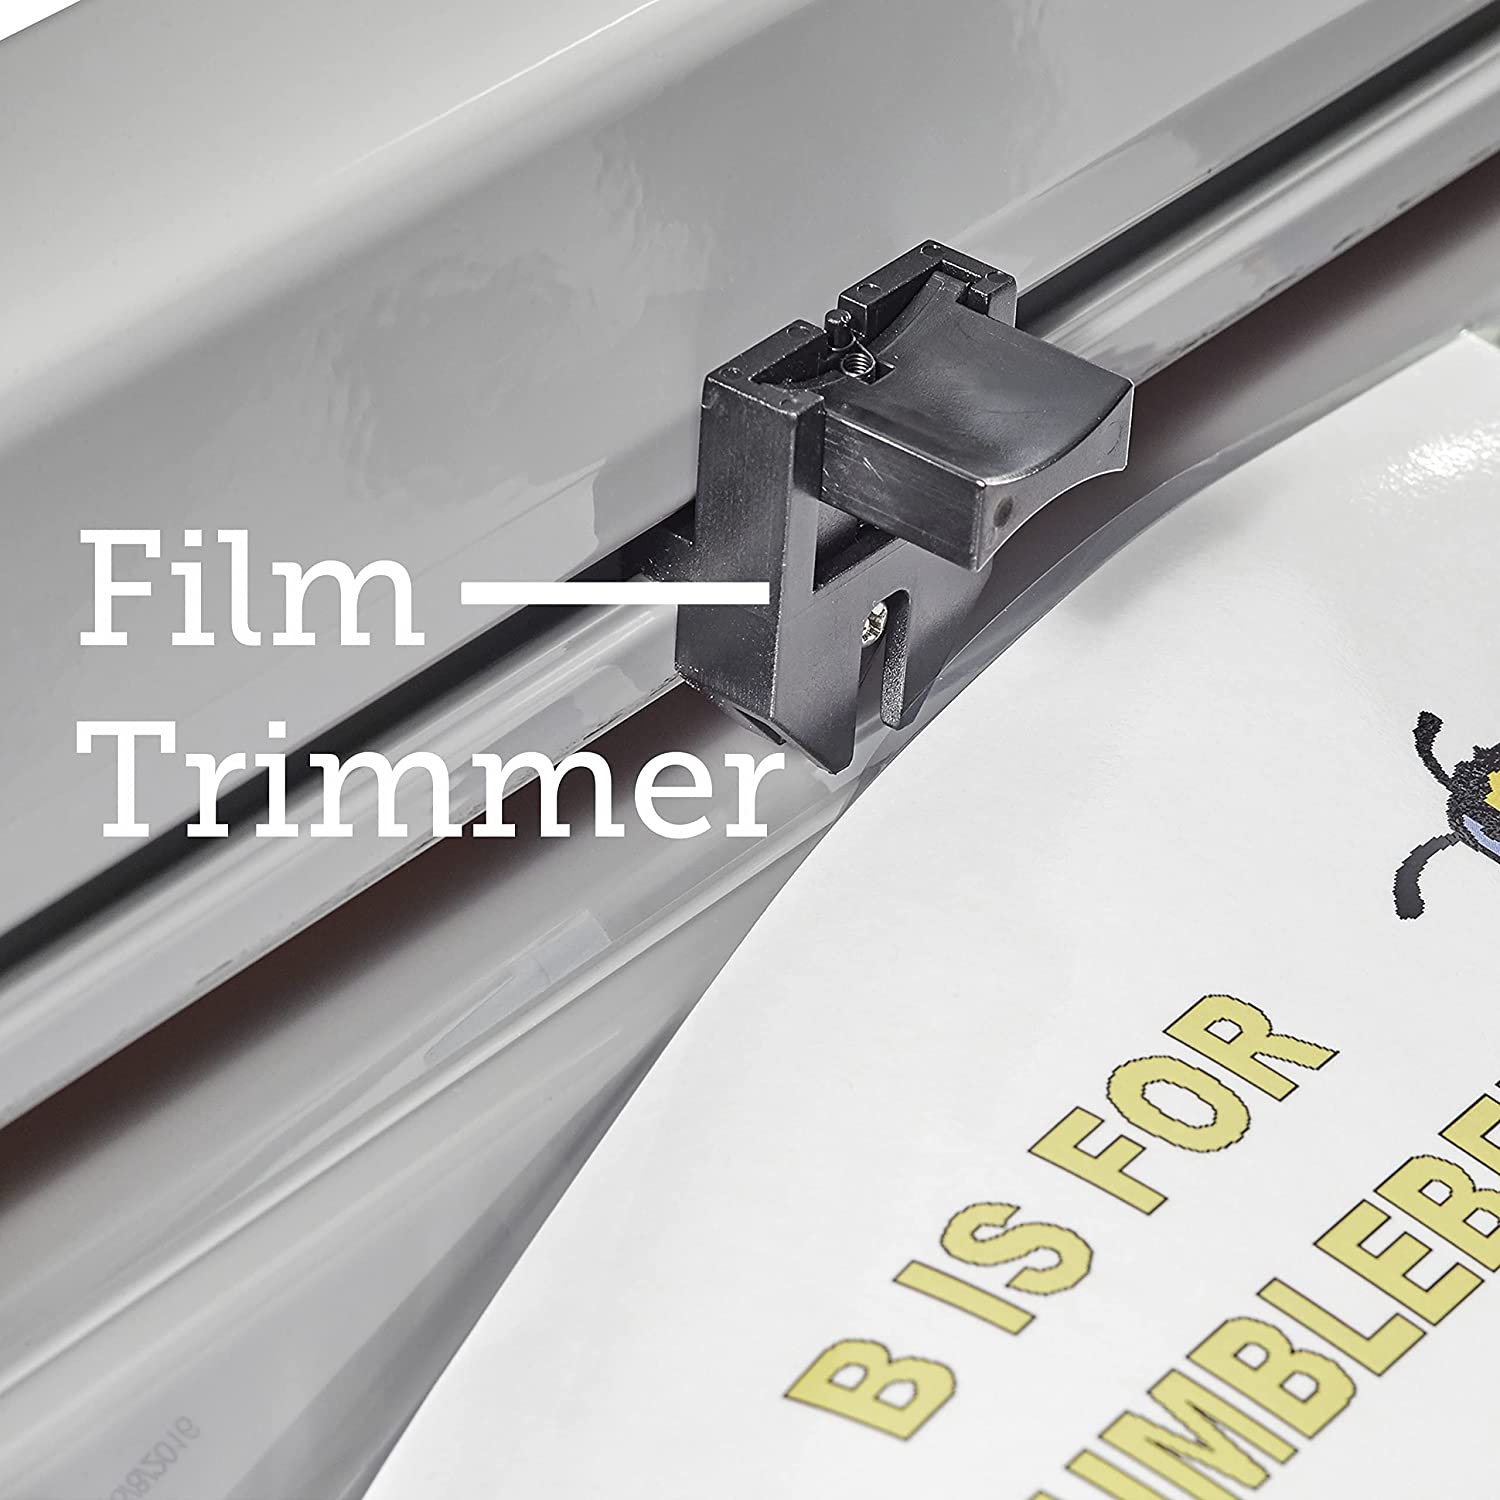 GBC Thermal Roll Laminator, Ultima 65, 27 inches Maximum Width Discount Bros, LLC.